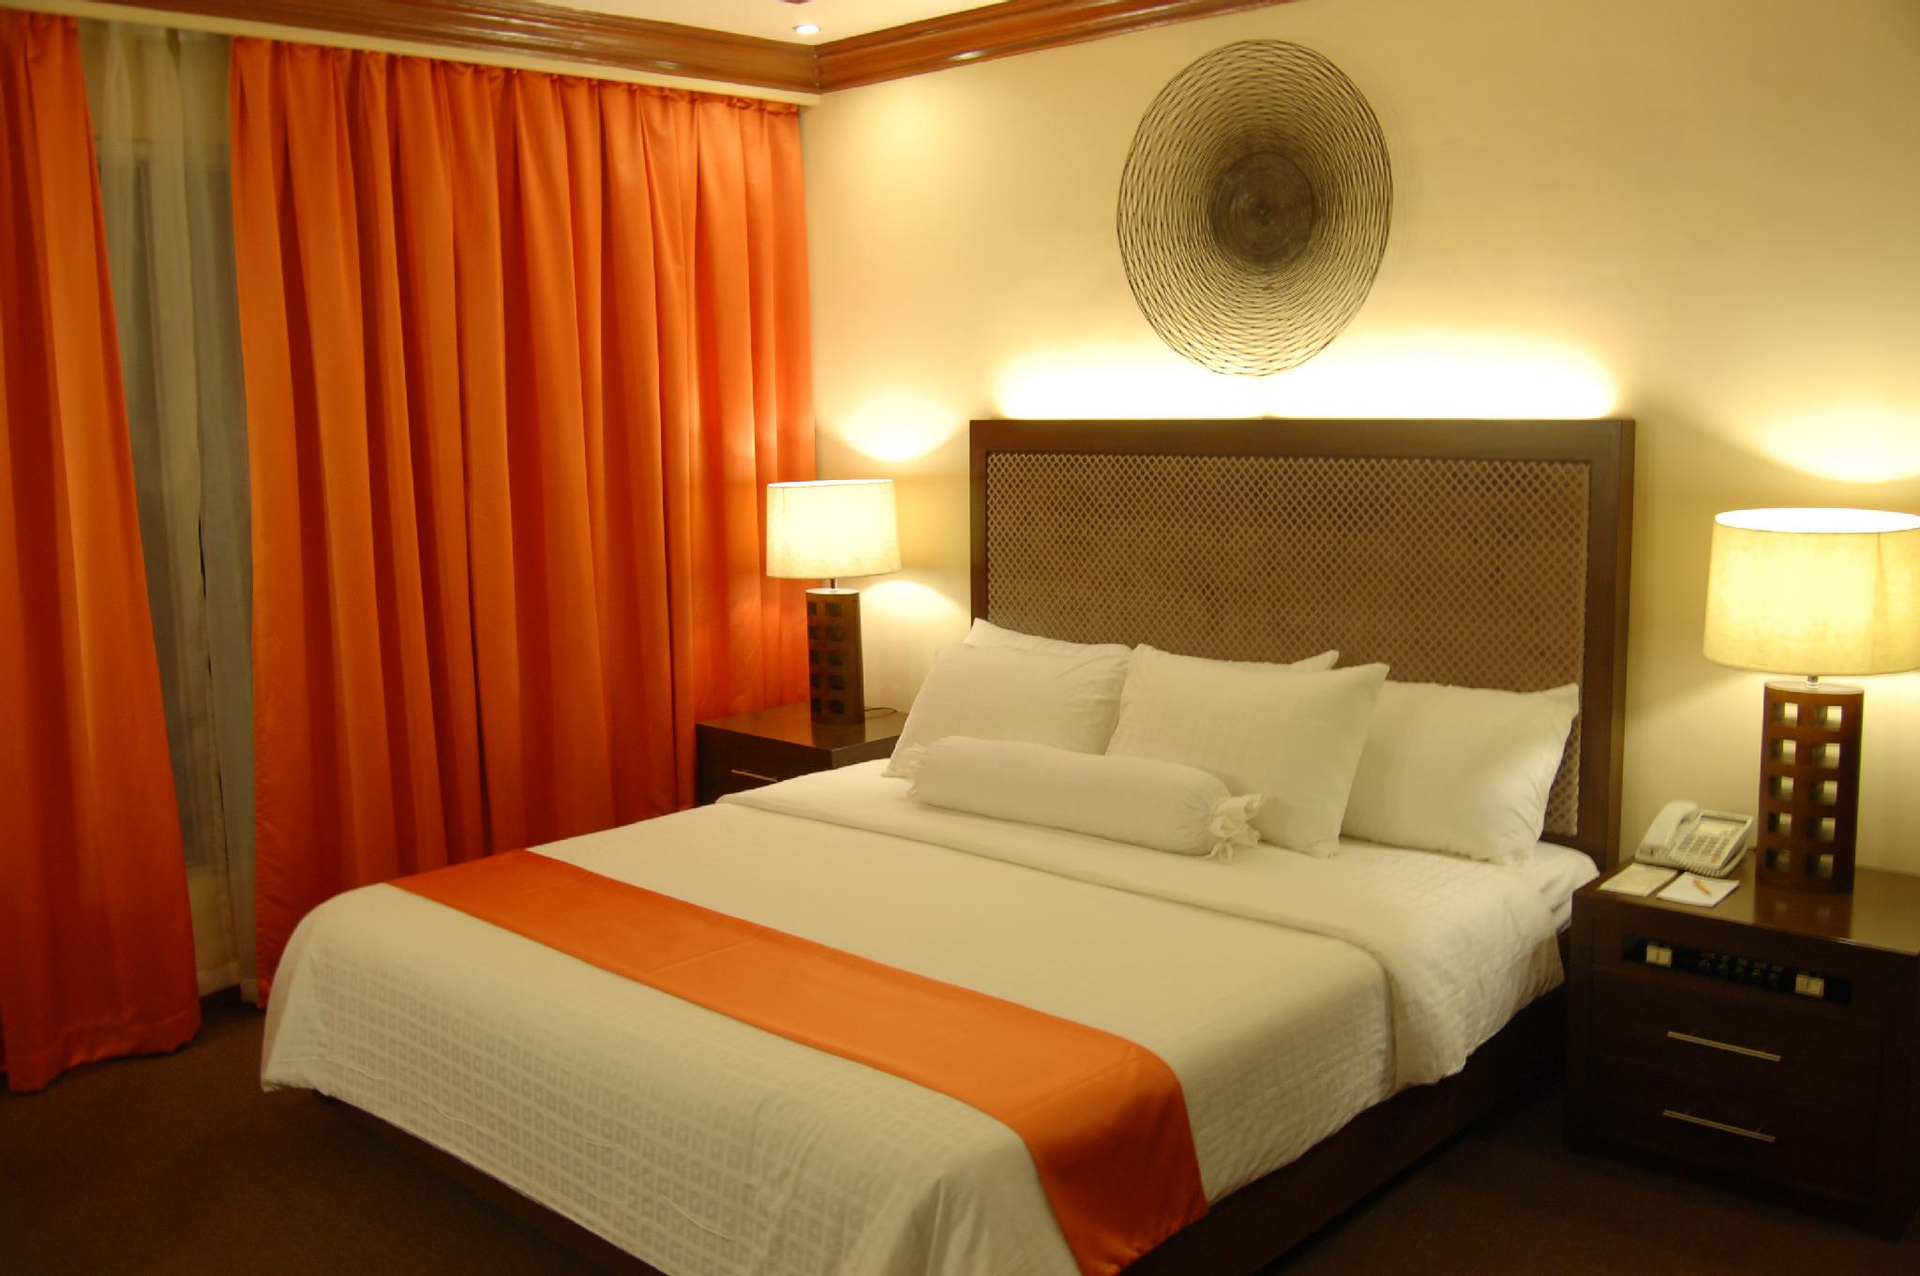 Bedroom 2, The Apo View Hotel, Davao City